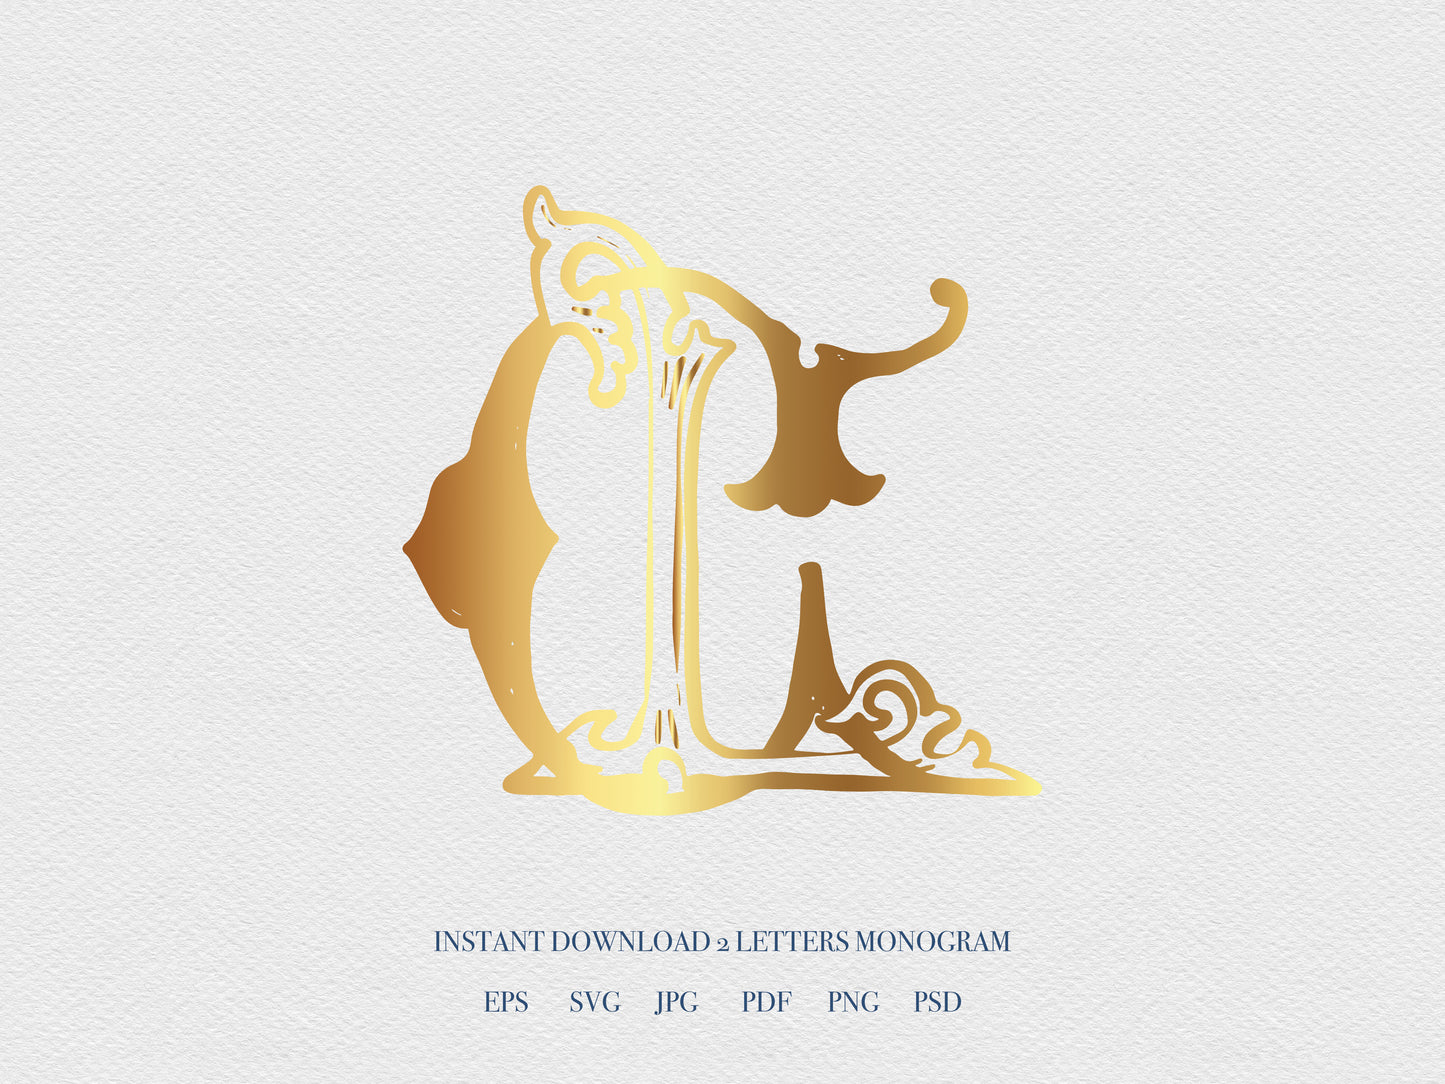 2 Letter Monogram with Letters CL LC | Digital Download - Wedding Monogram SVG, Personal Logo, Wedding Logo for Wedding Invitations The Wedding Crest Lab